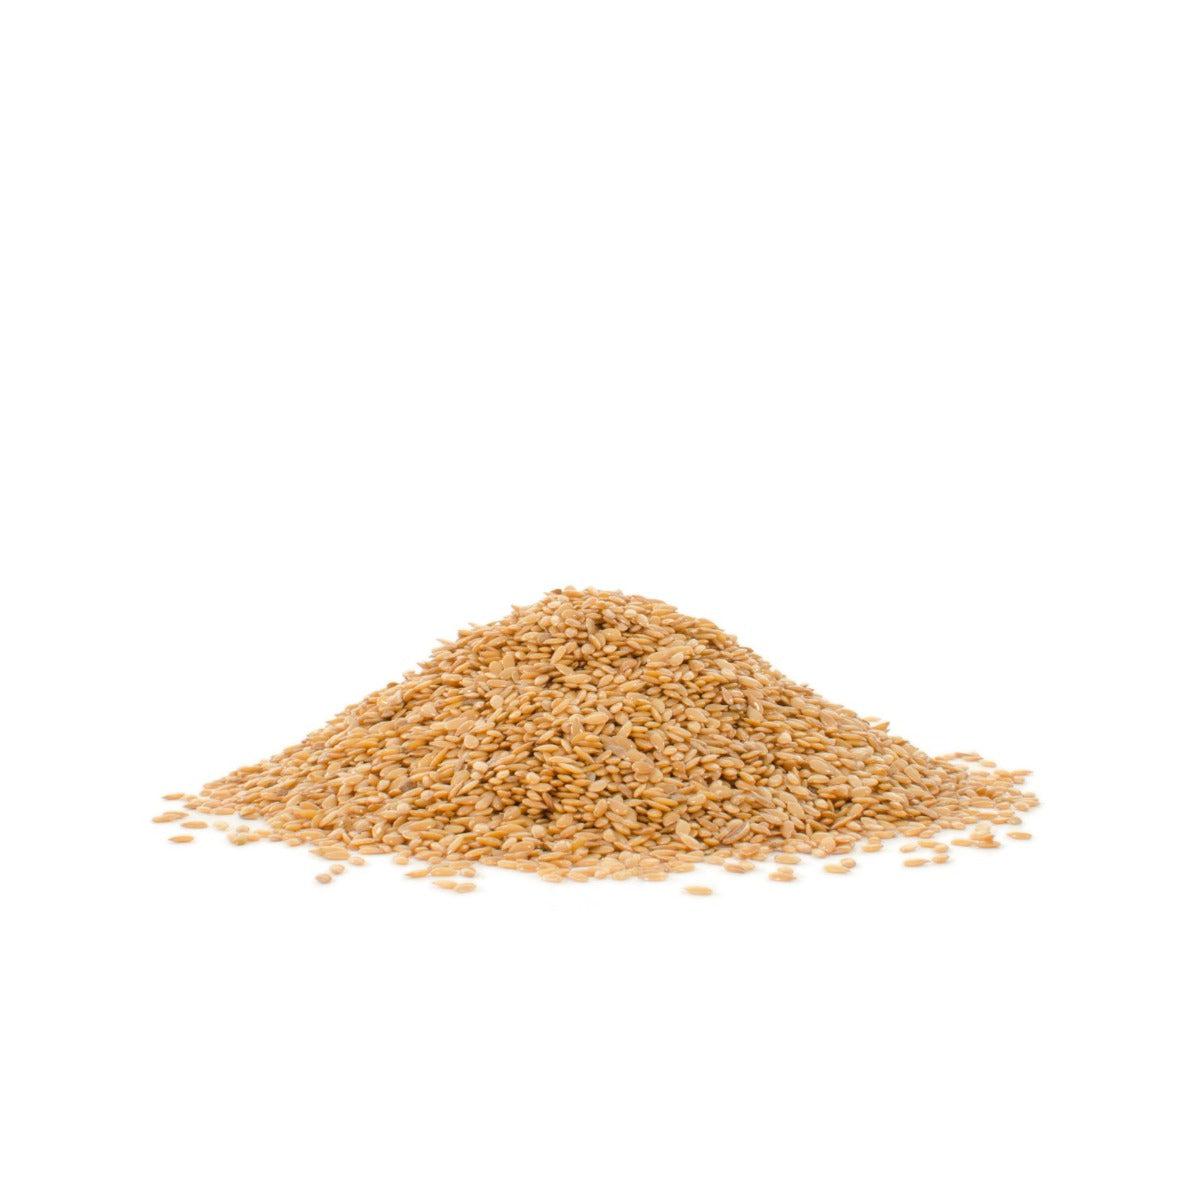 Bob's Red Mill Organic Golden Flaxseeds Gluten Free Vegan Non-GMO 368g